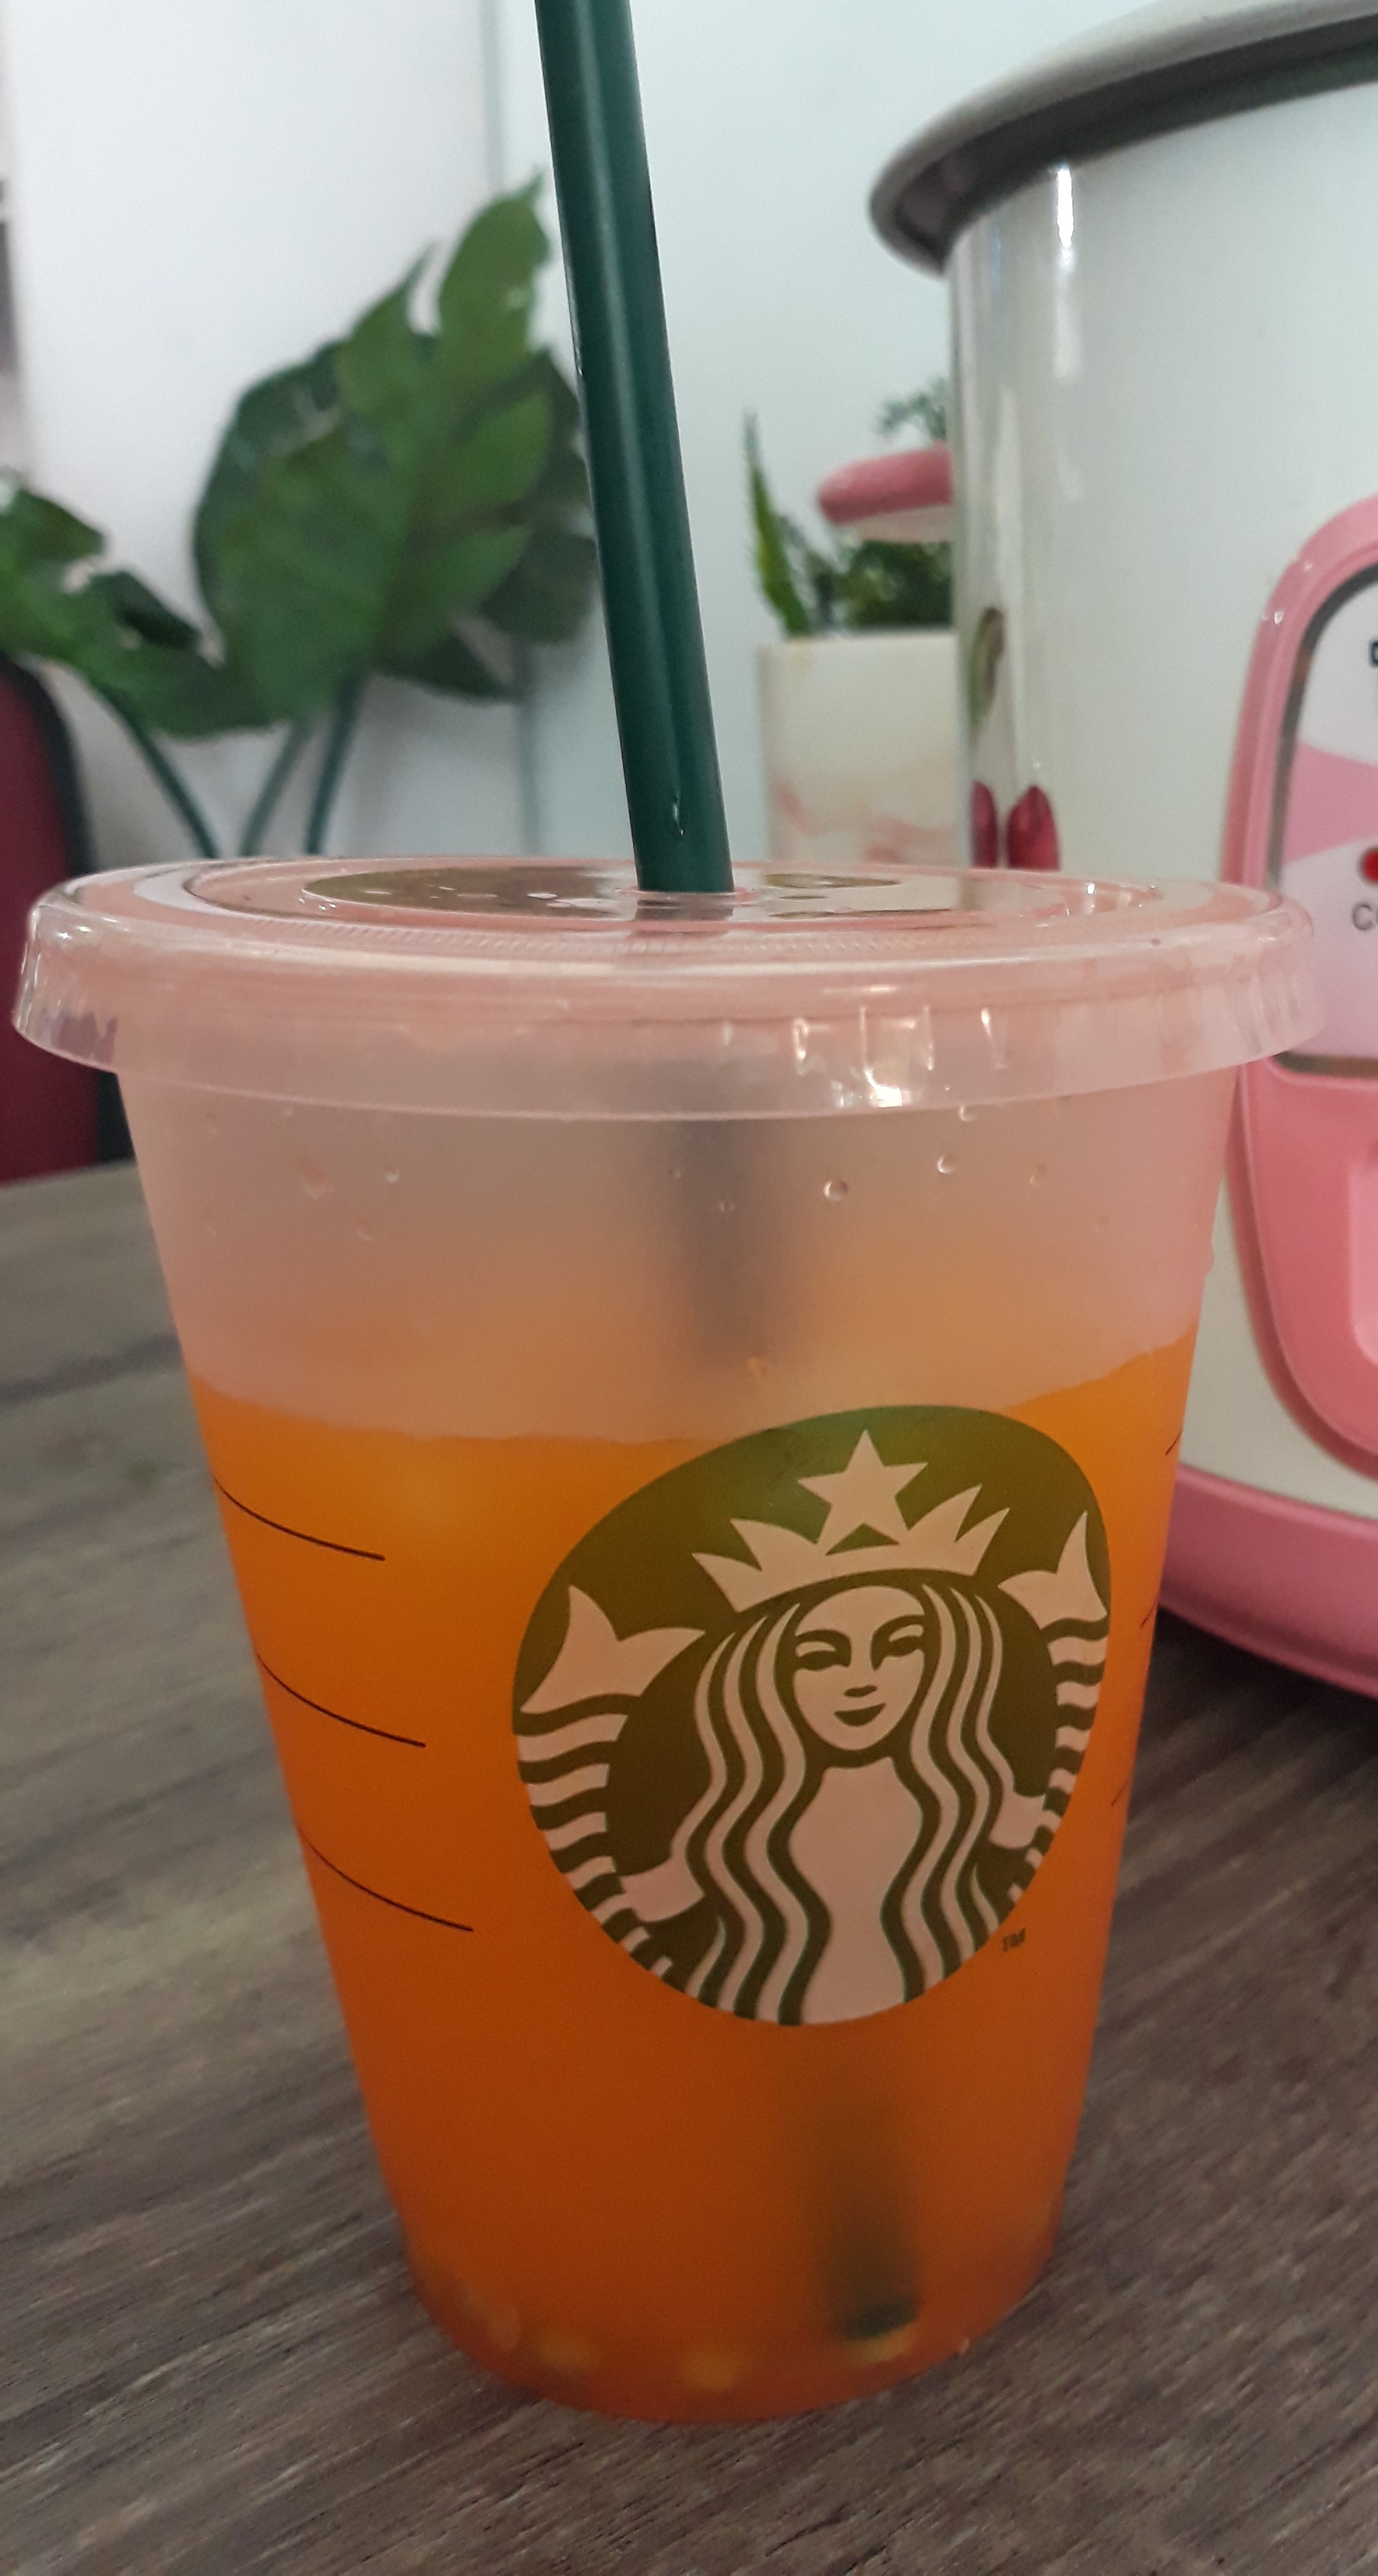 https://upload.wikimedia.org/wikipedia/commons/9/91/Orange_juice_in_a_Starbucks_cup.jpg